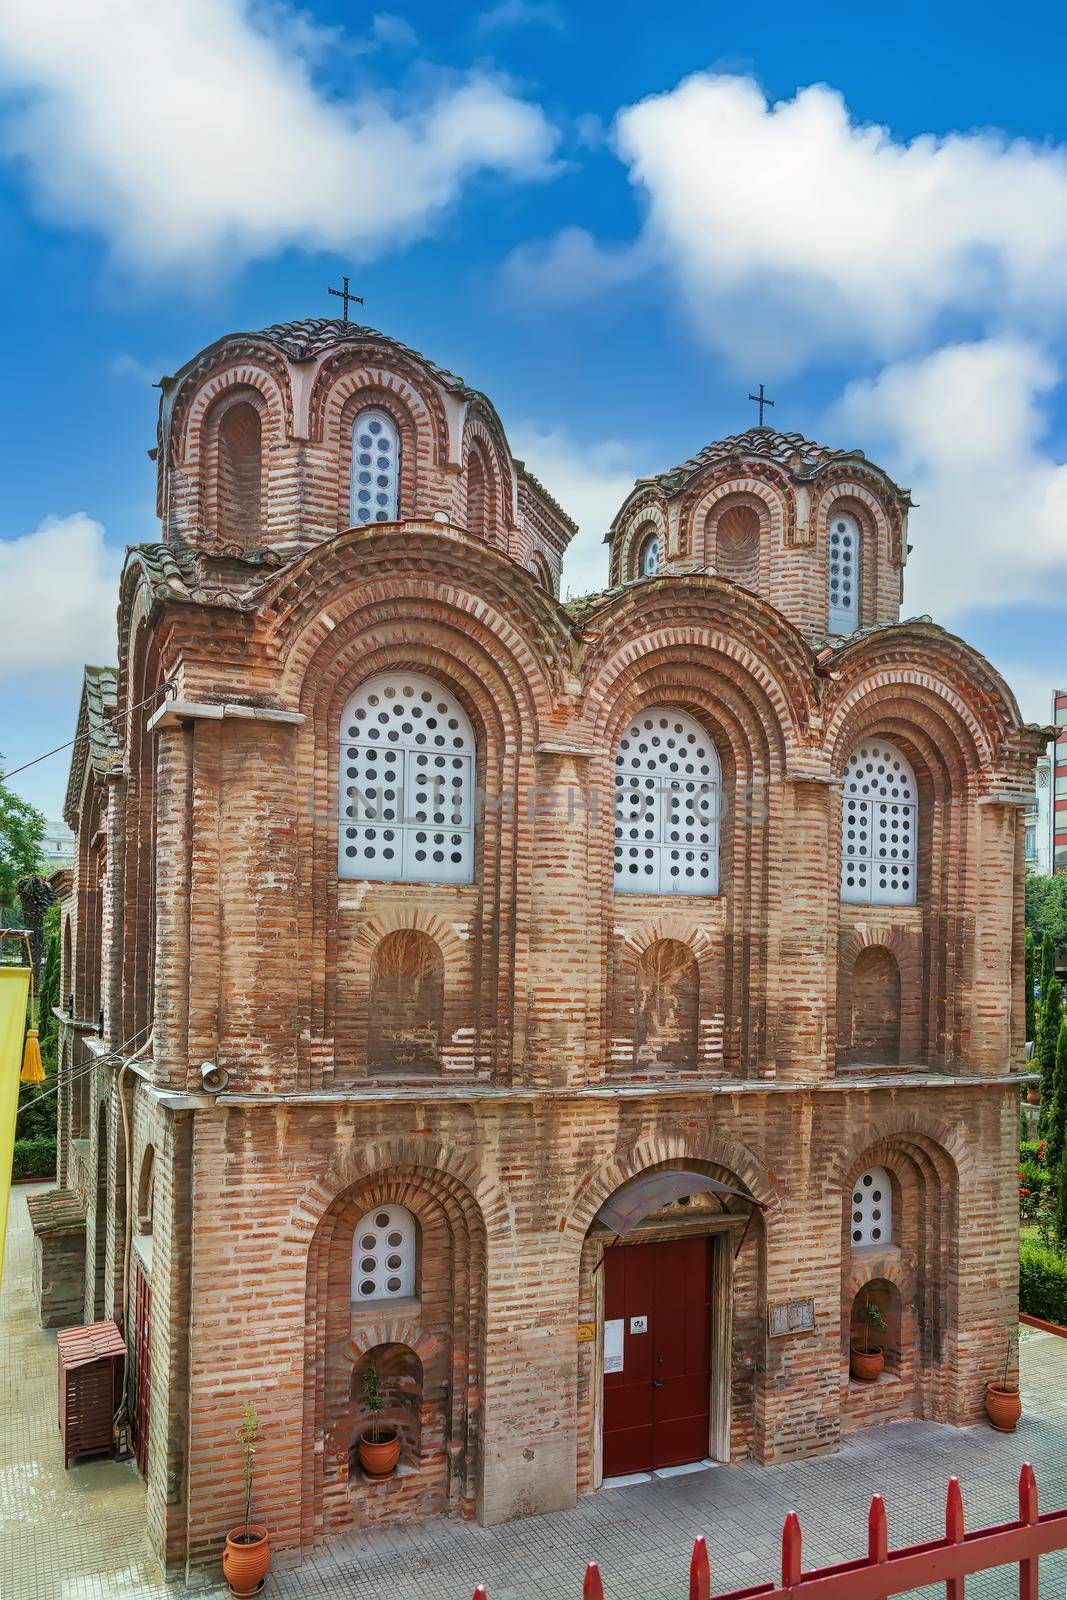 Church of Panagia Chalkeon is an 11th-century Byzantine church in Thessaloniki, Greece